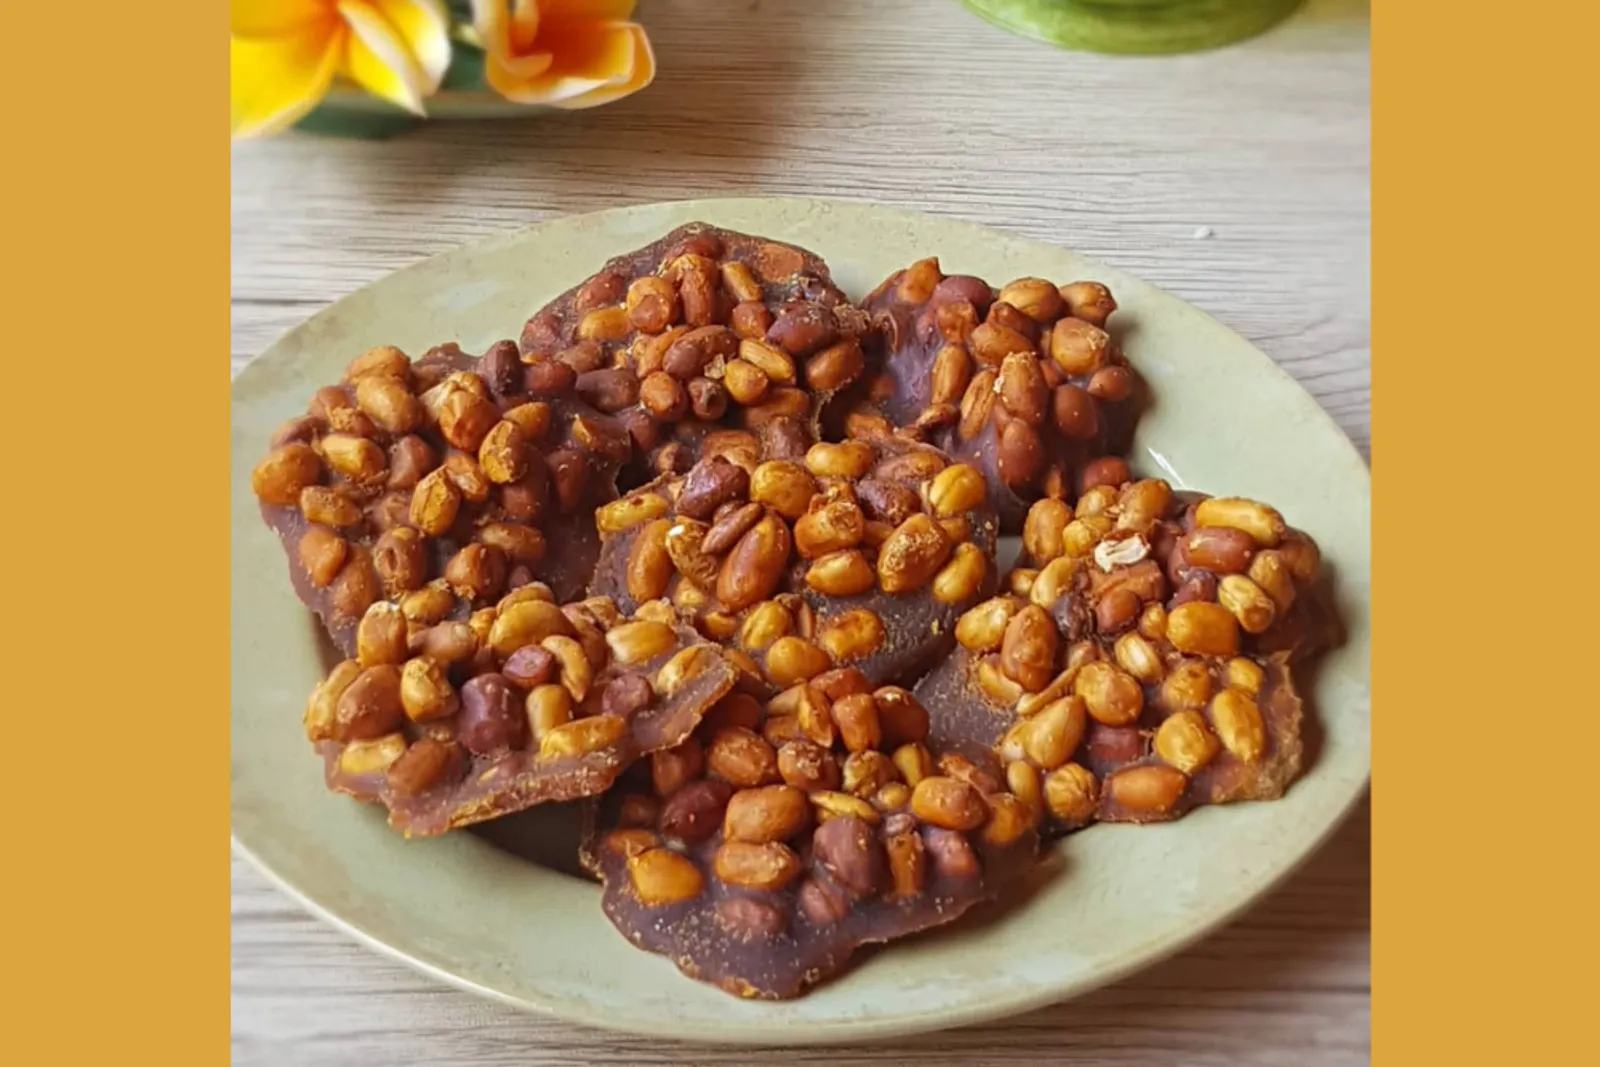 Kue Kacang Tanah Lezat: Nikmati 3 Resep Variasi yang Menggugah Selera